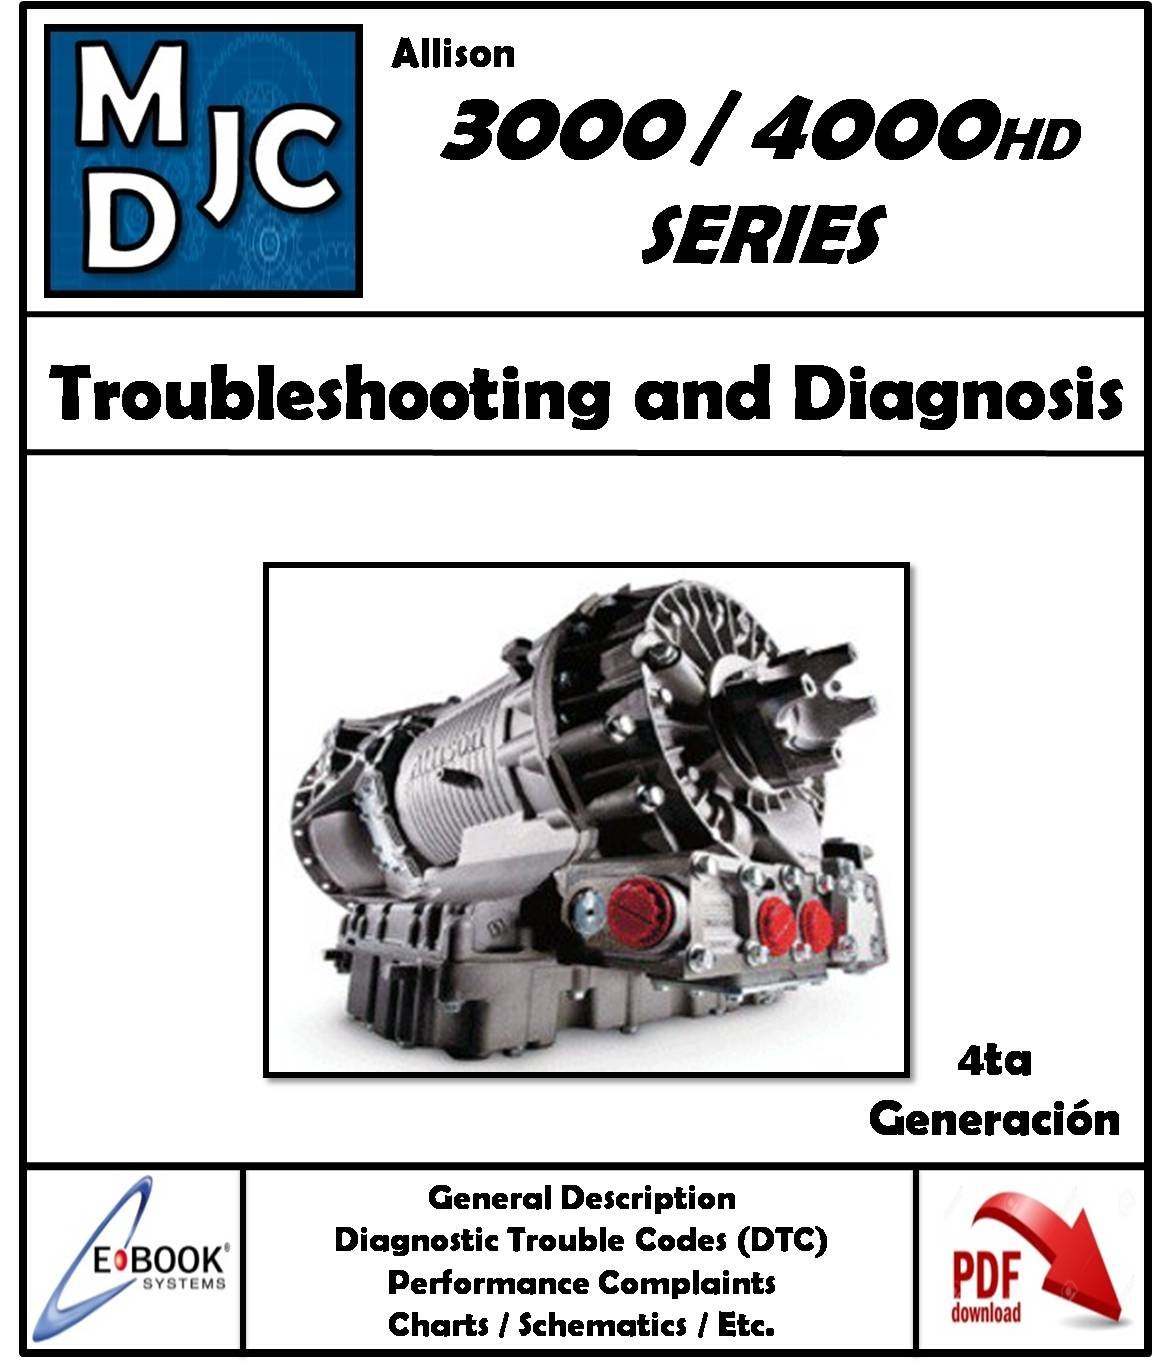 Manual de Taller ( Diagnóstico ) Caja Automática Allison 3000 // 4000 Series